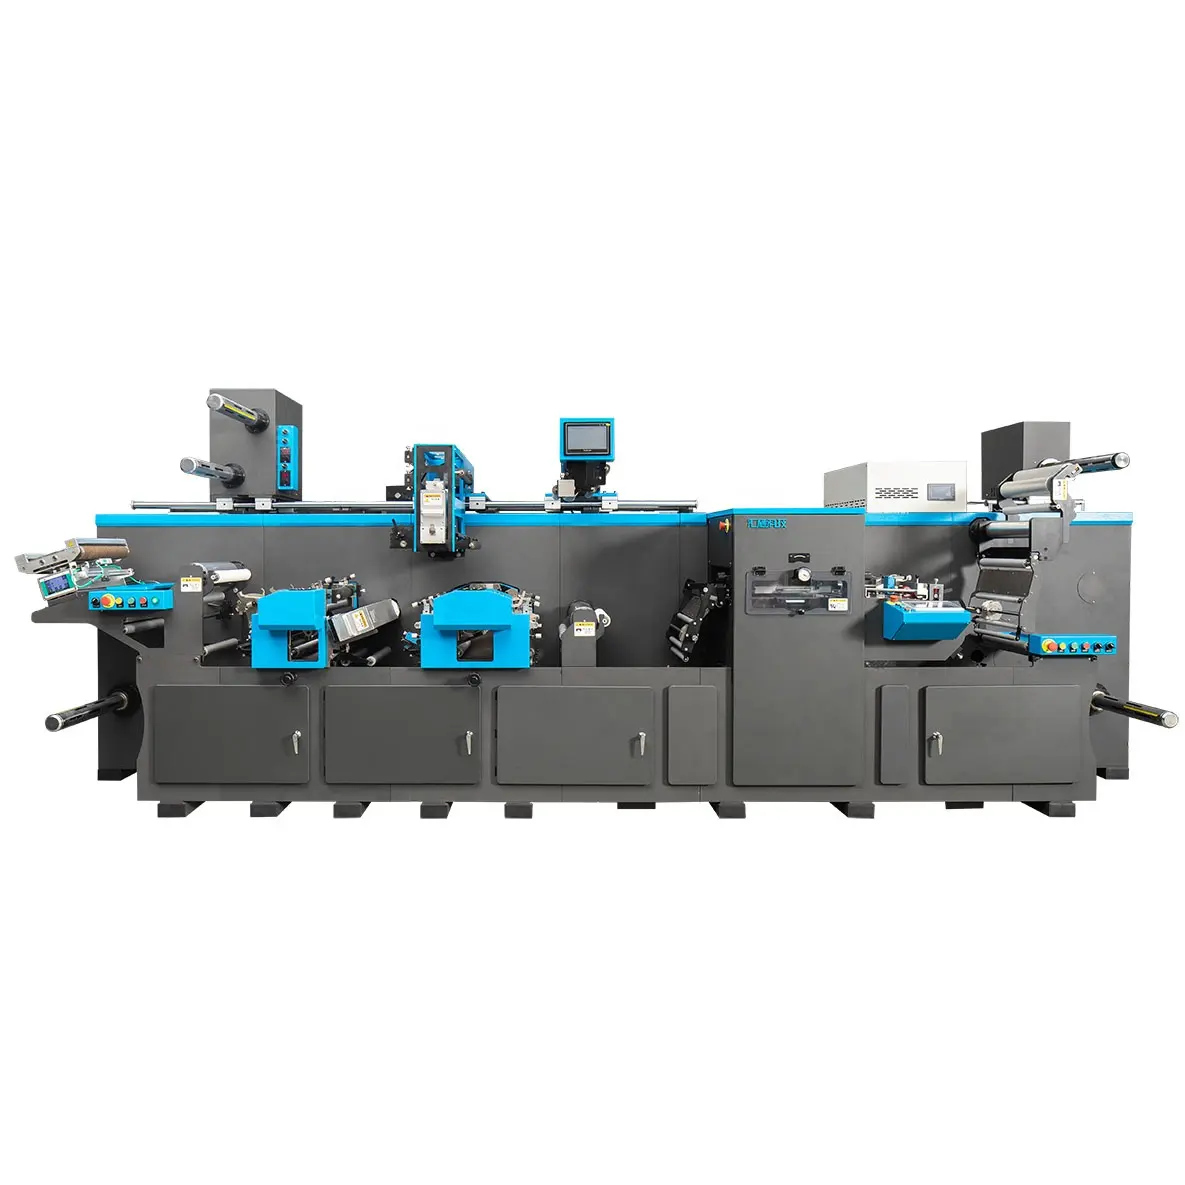 HONTEC/DIGIFINI FD-350ES macchina per la stampa di etichette adesive per macchine per la stampa di Post press